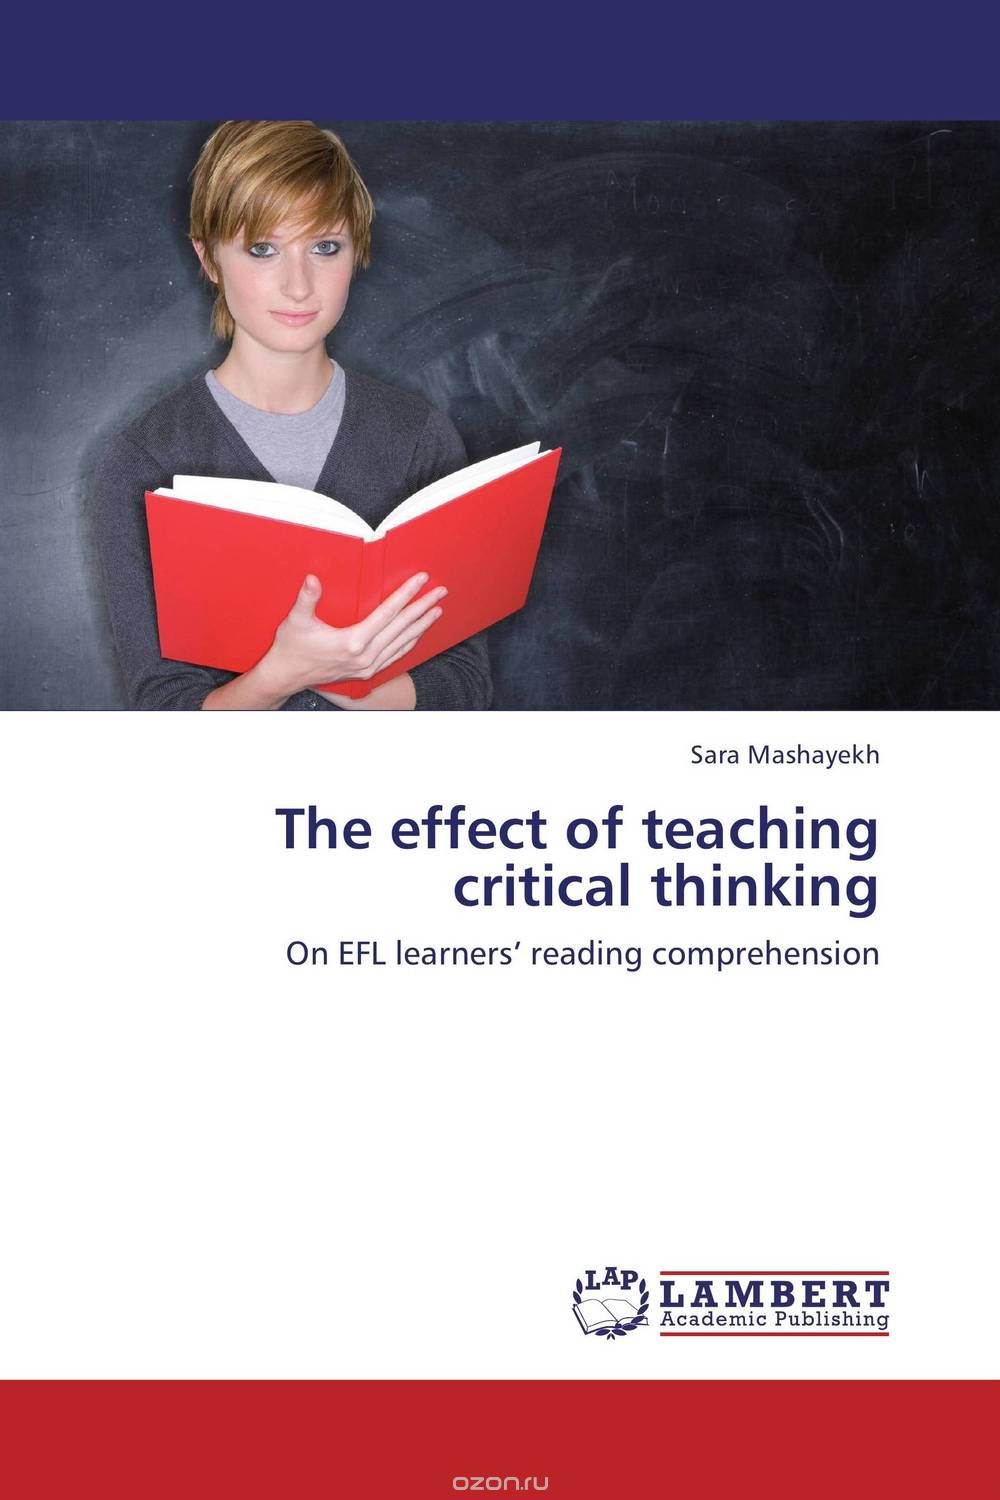 Скачать книгу "The effect of teaching critical thinking"